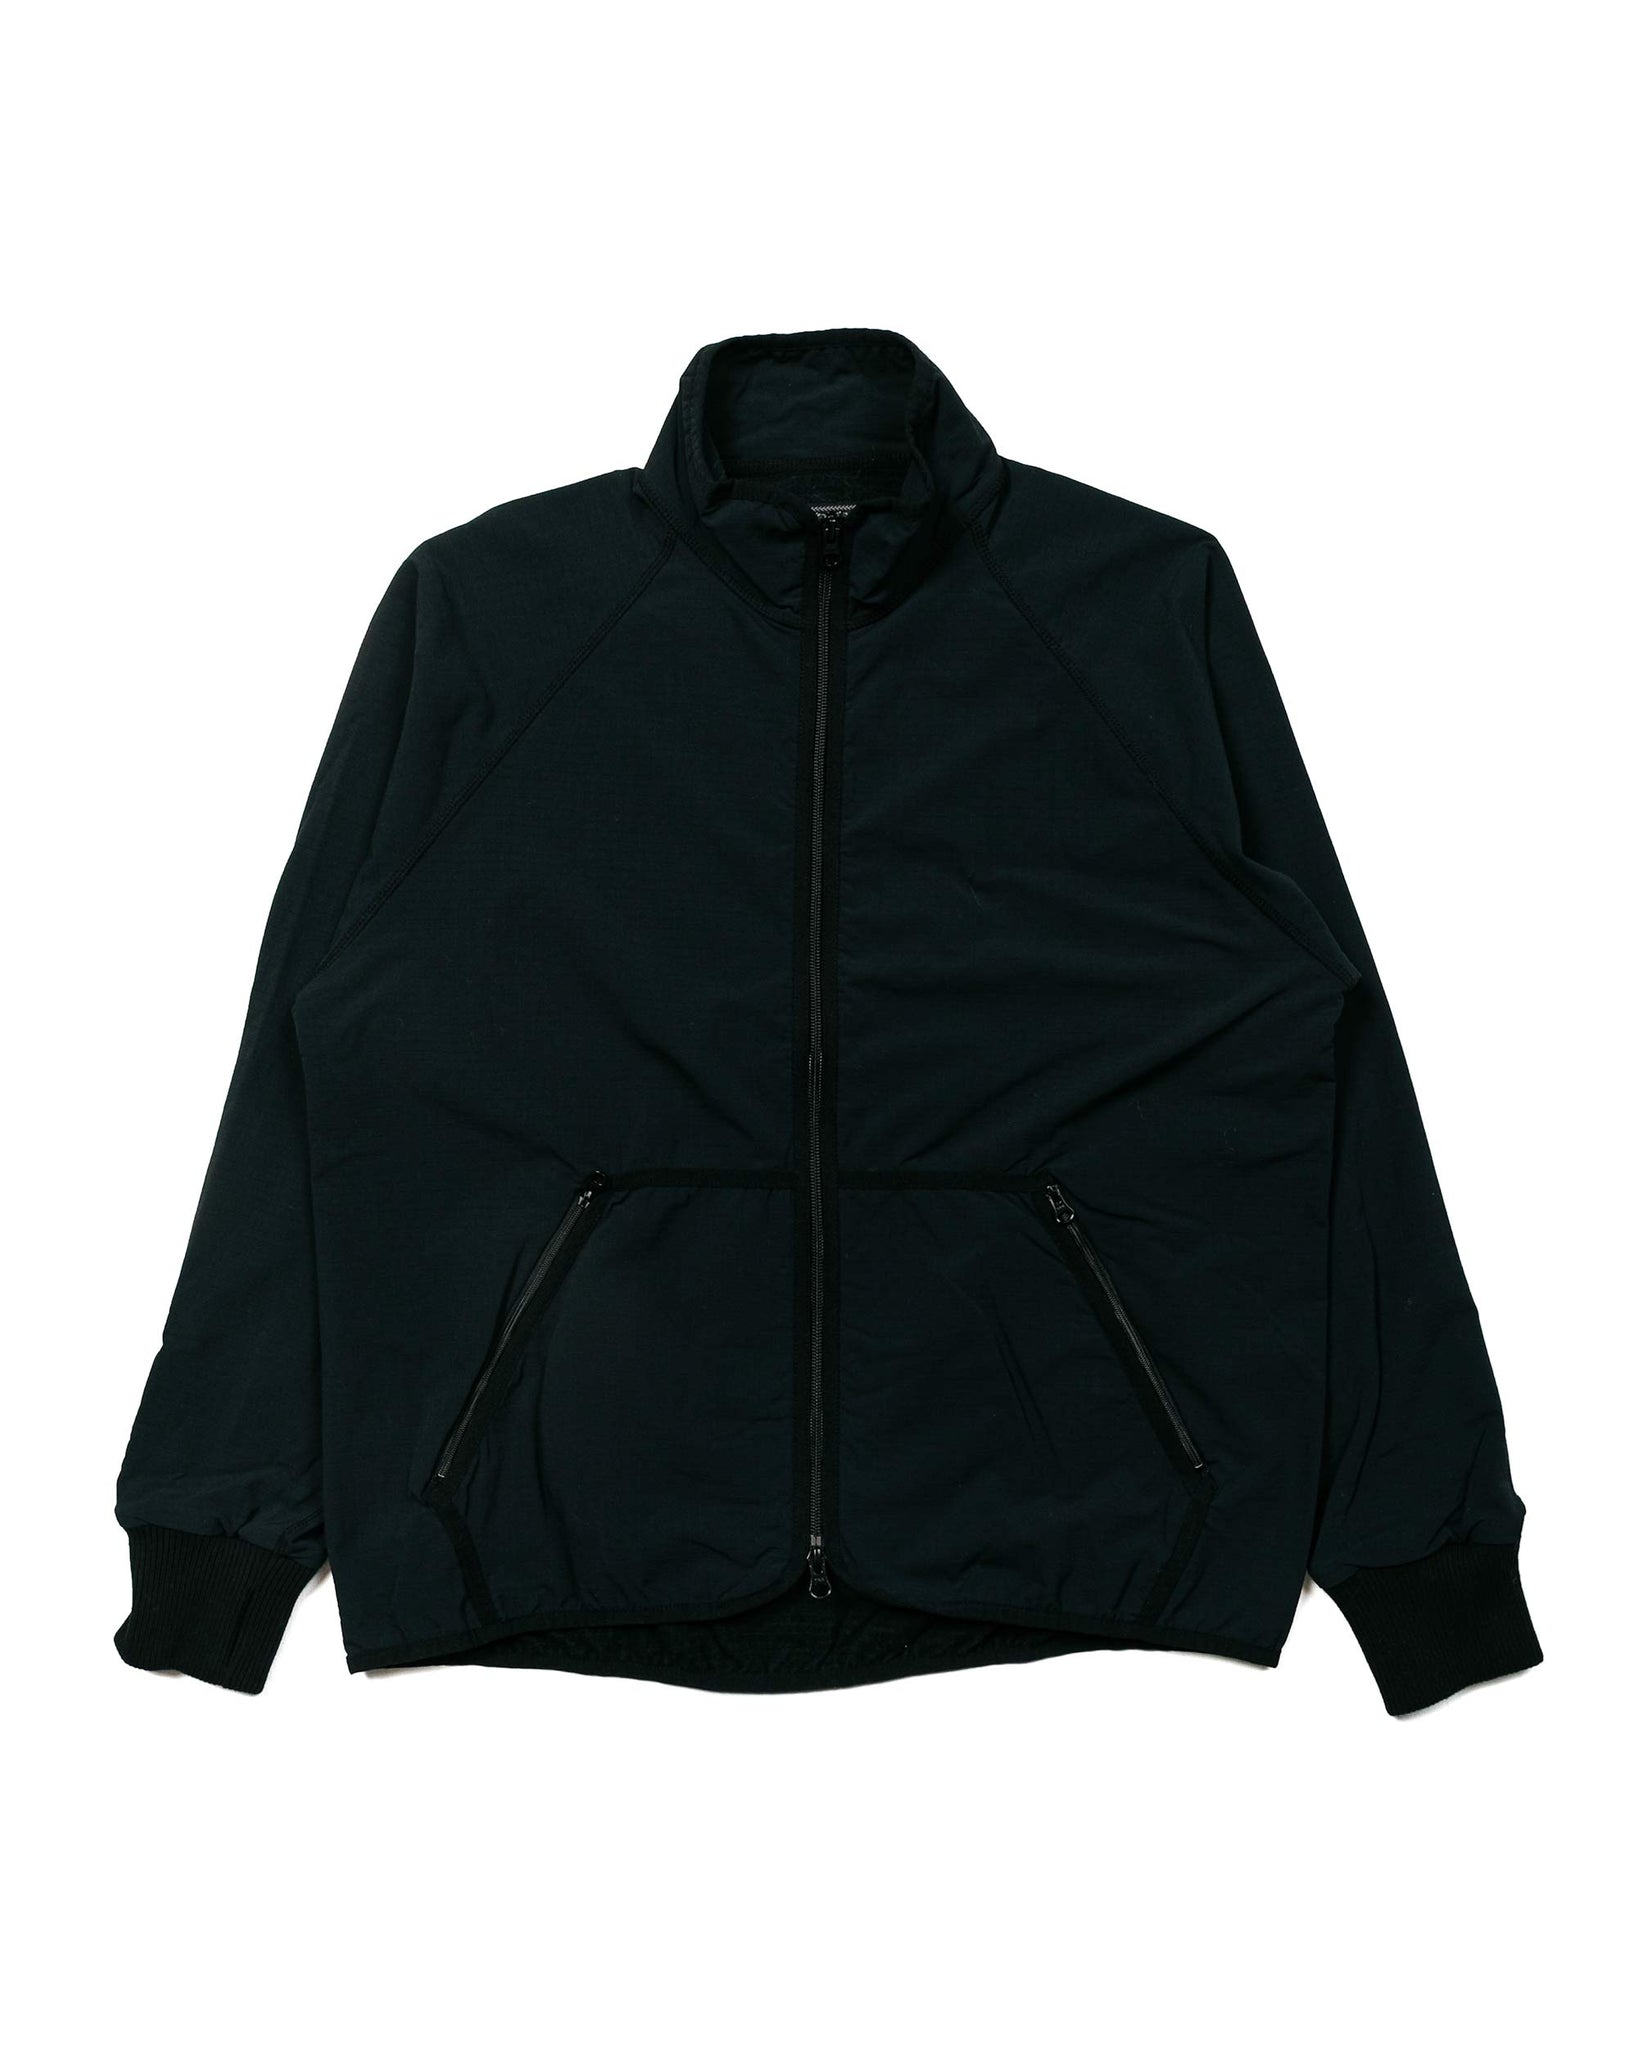 Beams Plus MIL Liner Jersey Back Fleece Black